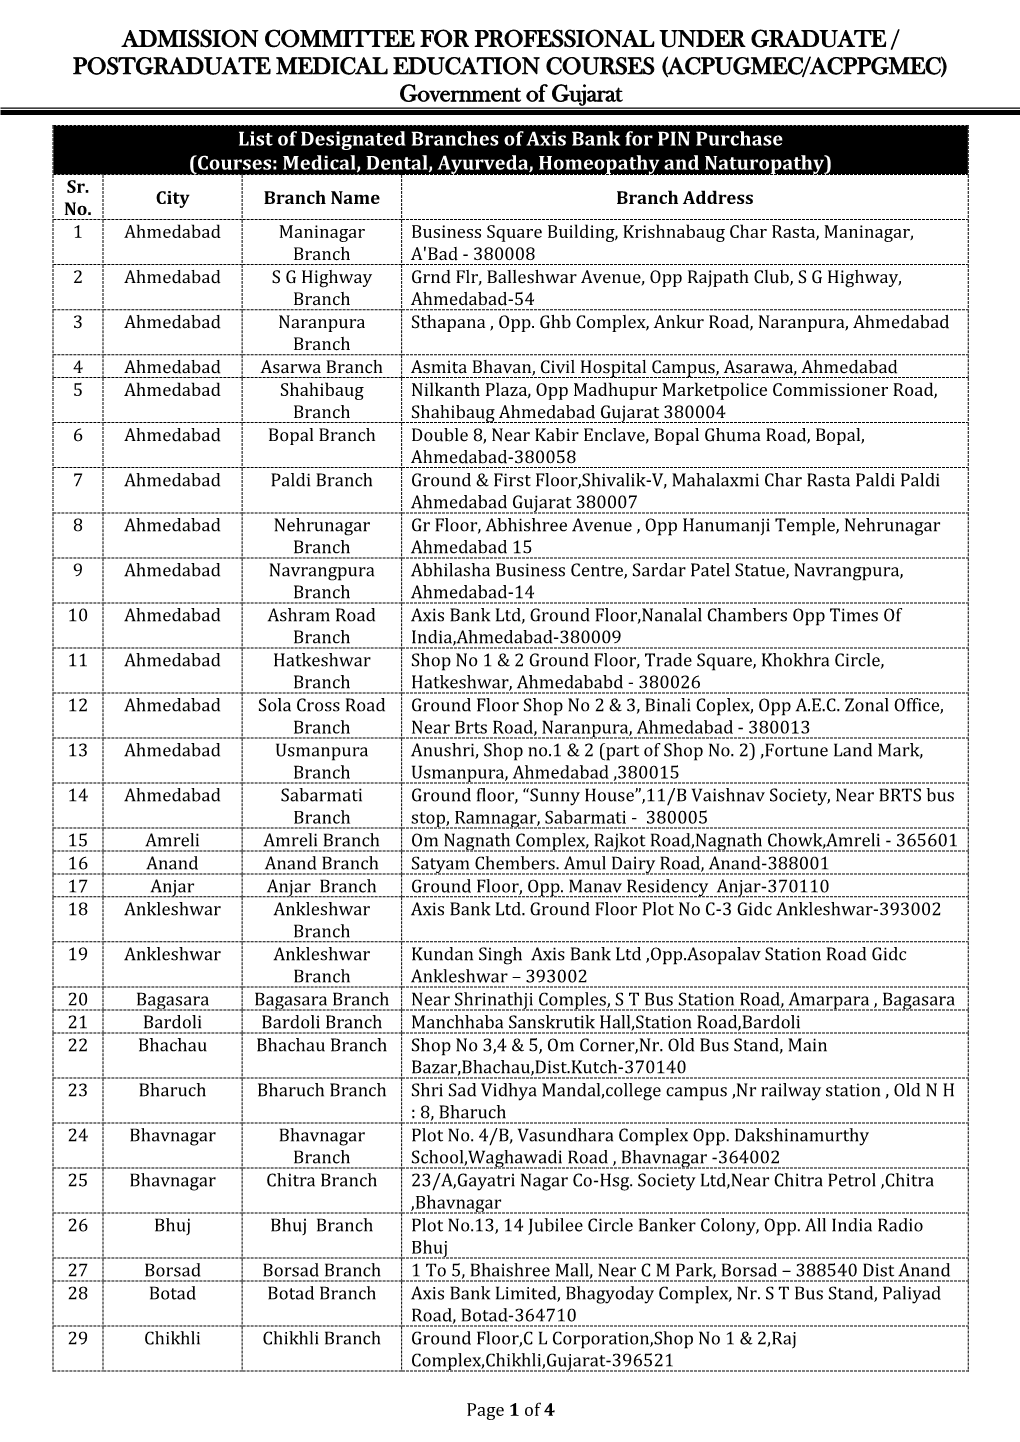 ADMISSION COMMITTEE for PROFESSIONAL UNDER GRADUATE / POSTGRADUATE MEDICAL EDUCATION COURSES (ACPUGMEC/ACPPGMEC) Government of Gujarat